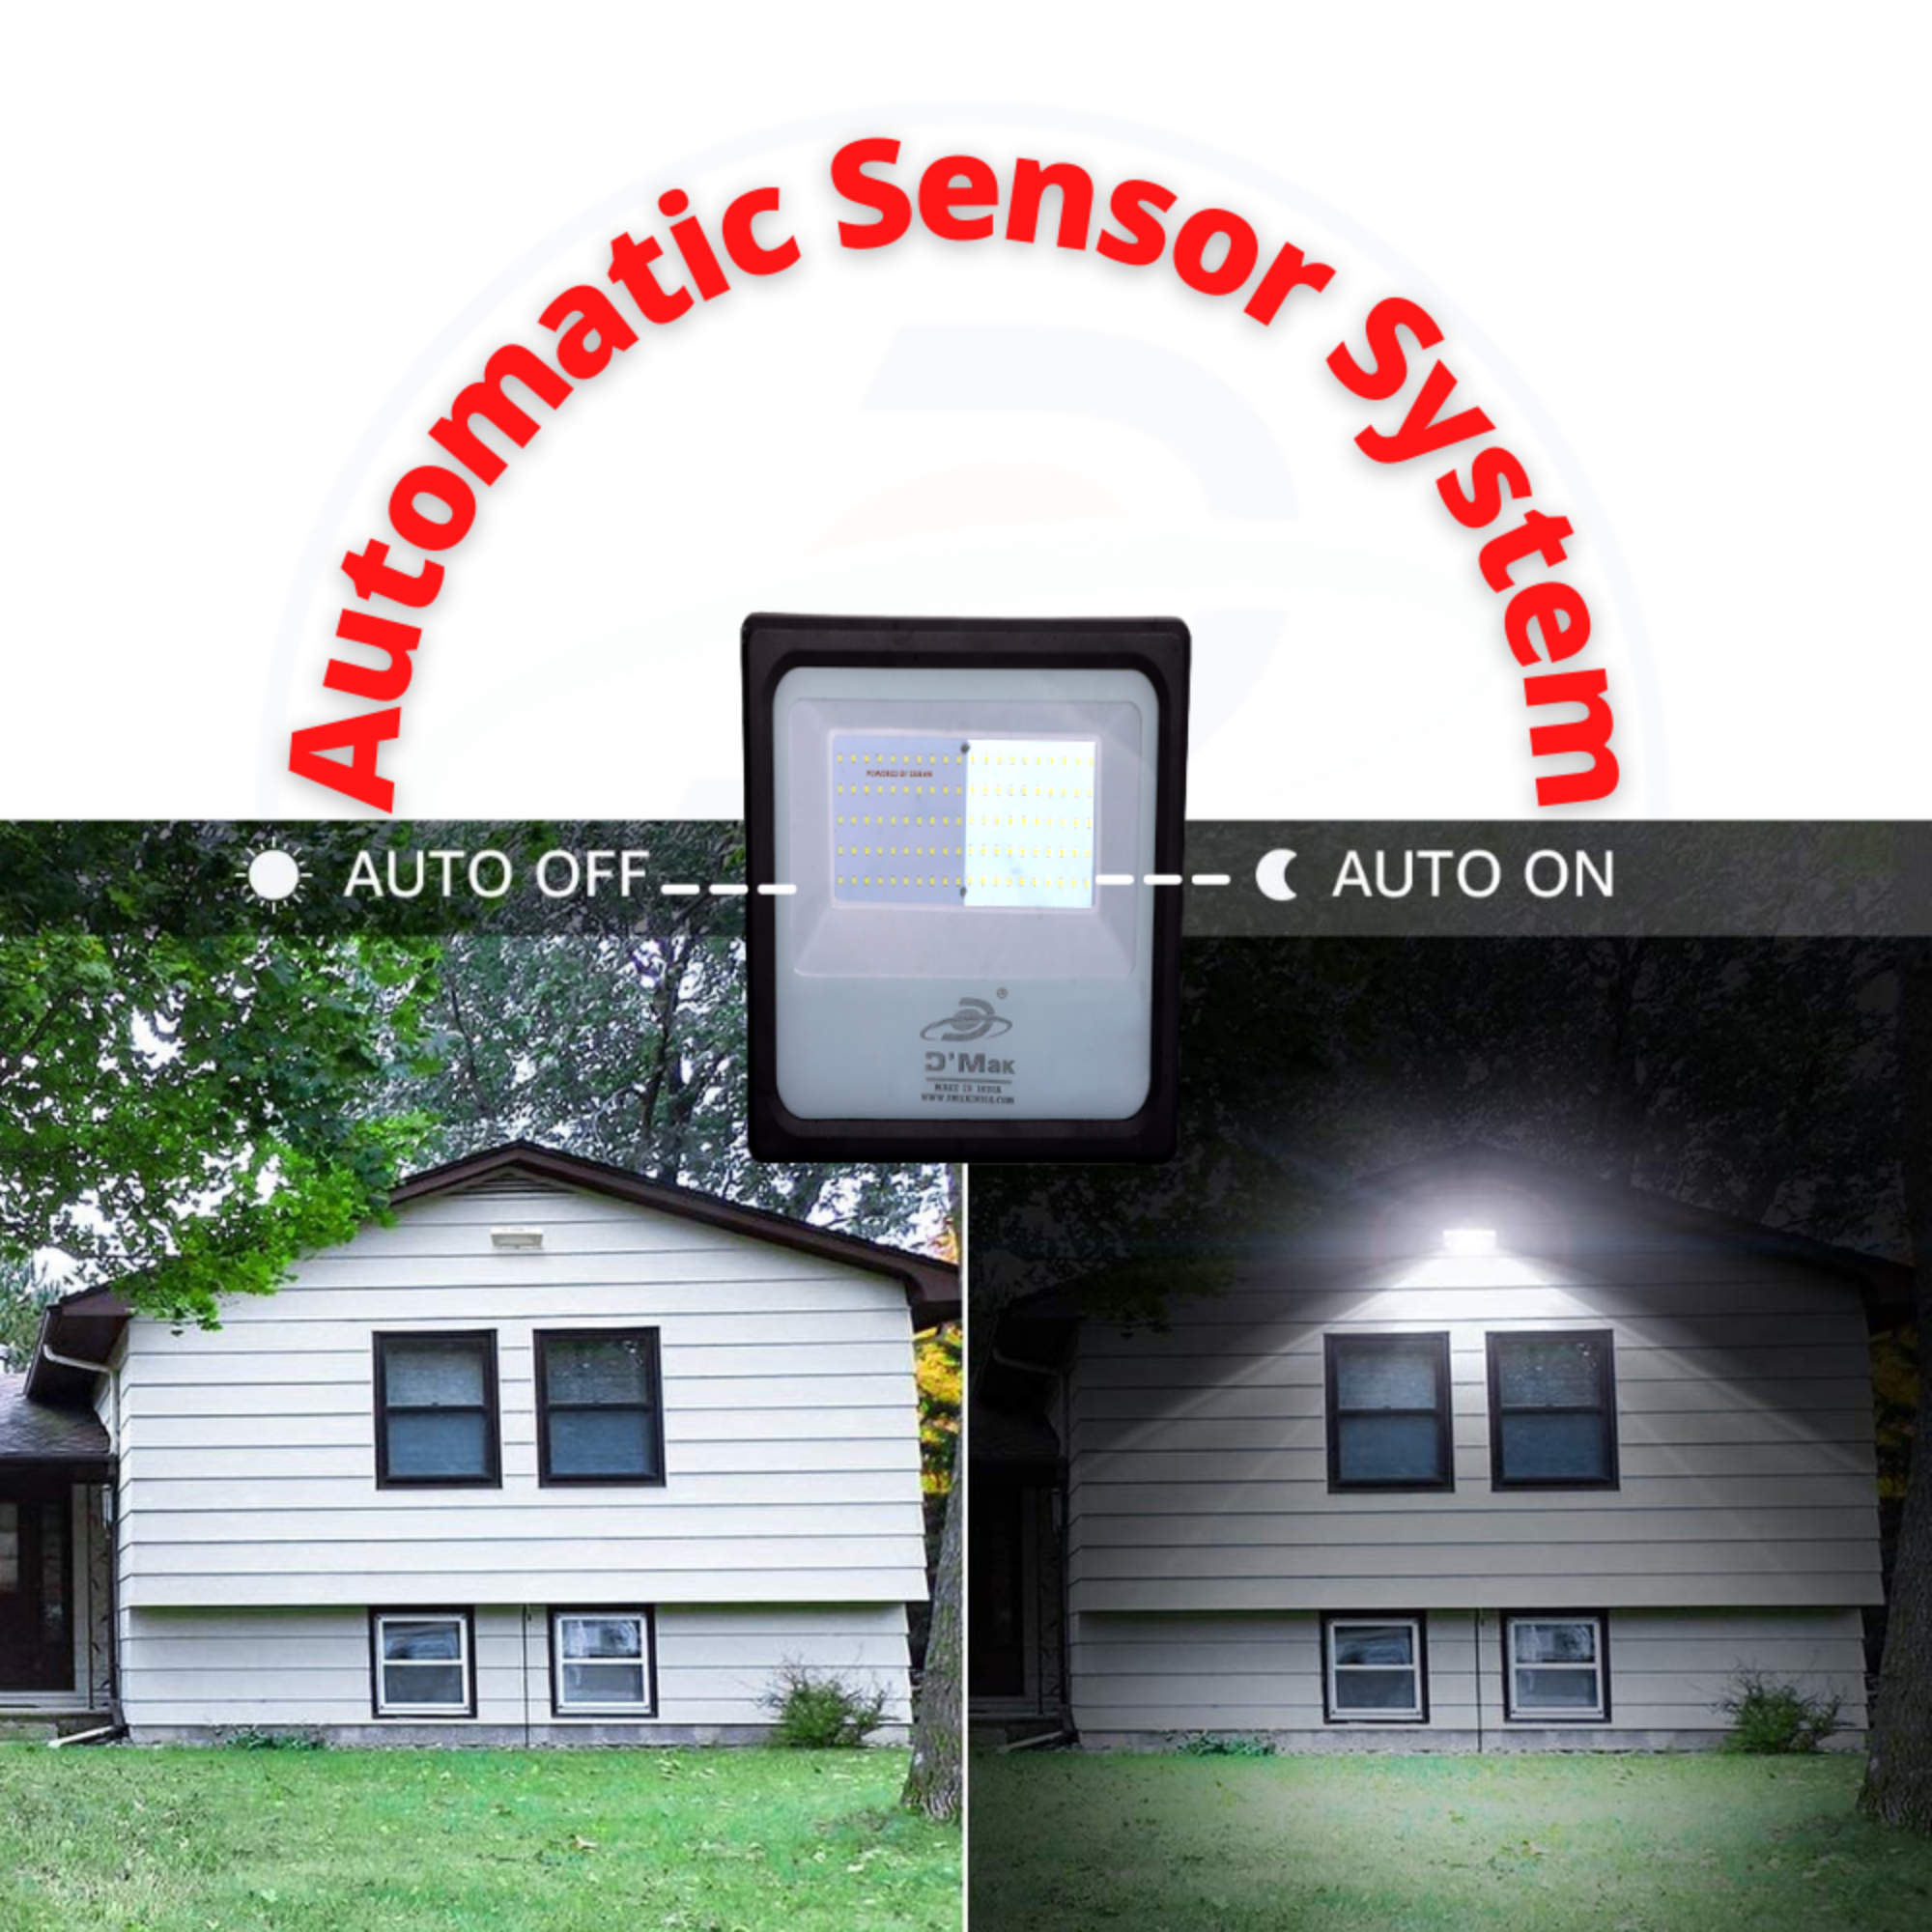 200 Watt Automatic Sensor System LED Down Chawk Flood Light Grey Body Waterproof IP65 For Outdoor Purposes